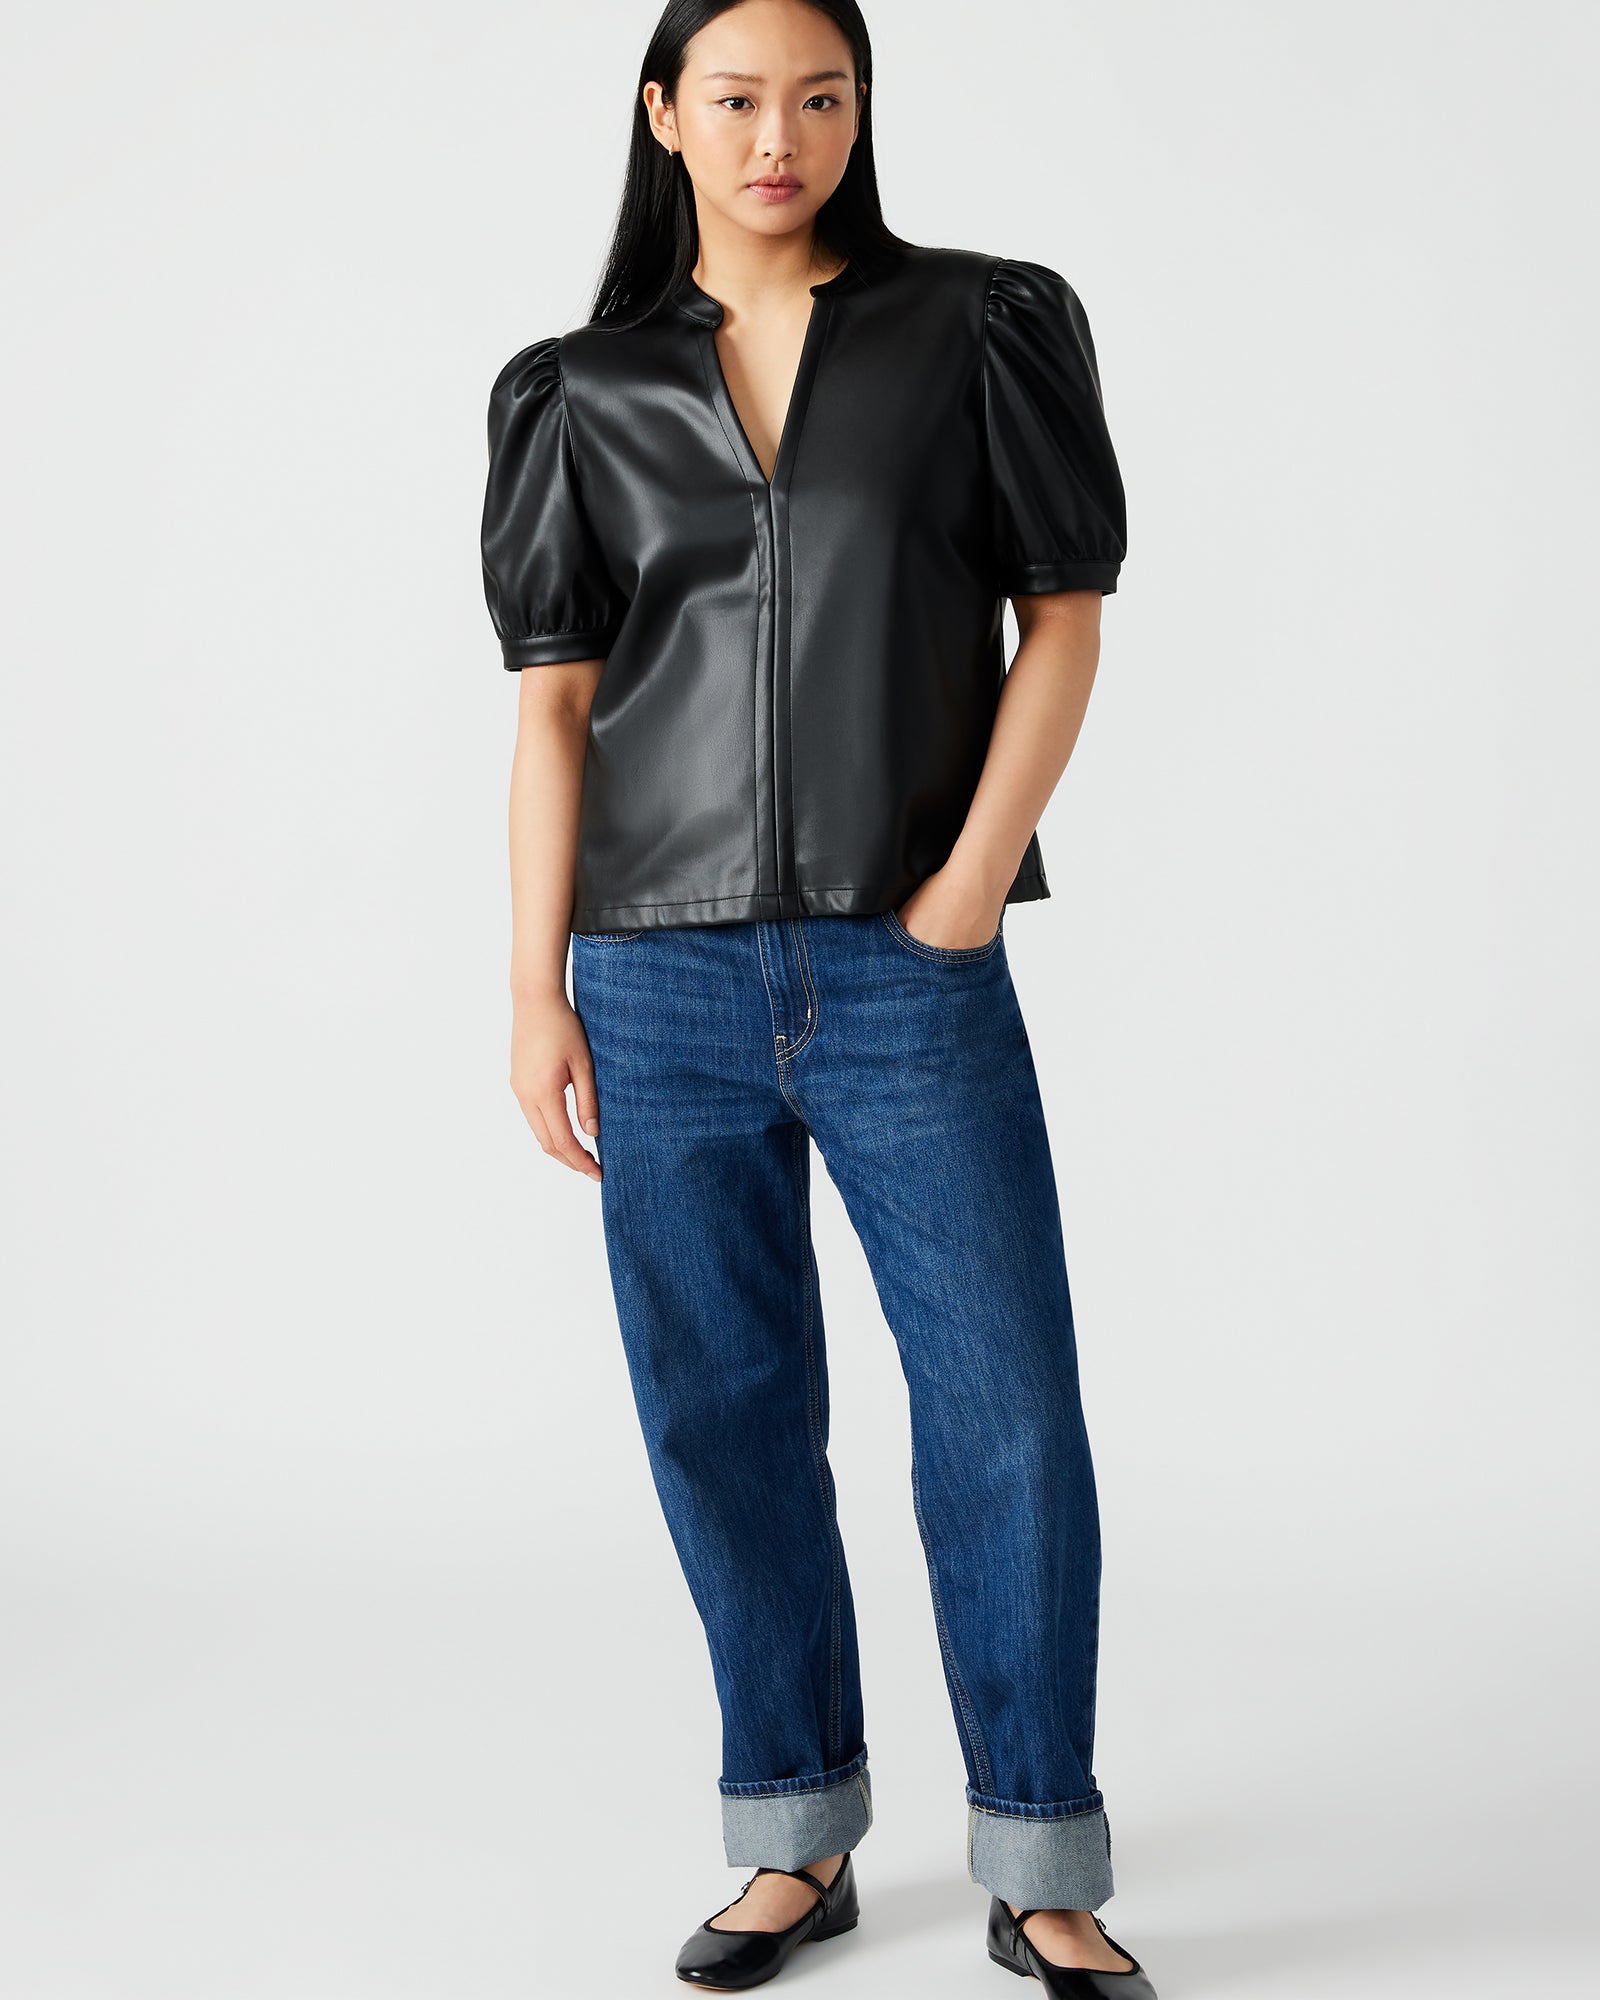 JANE Top Black | Women's Short Sleeve Faux Leather Top – Steve Madden